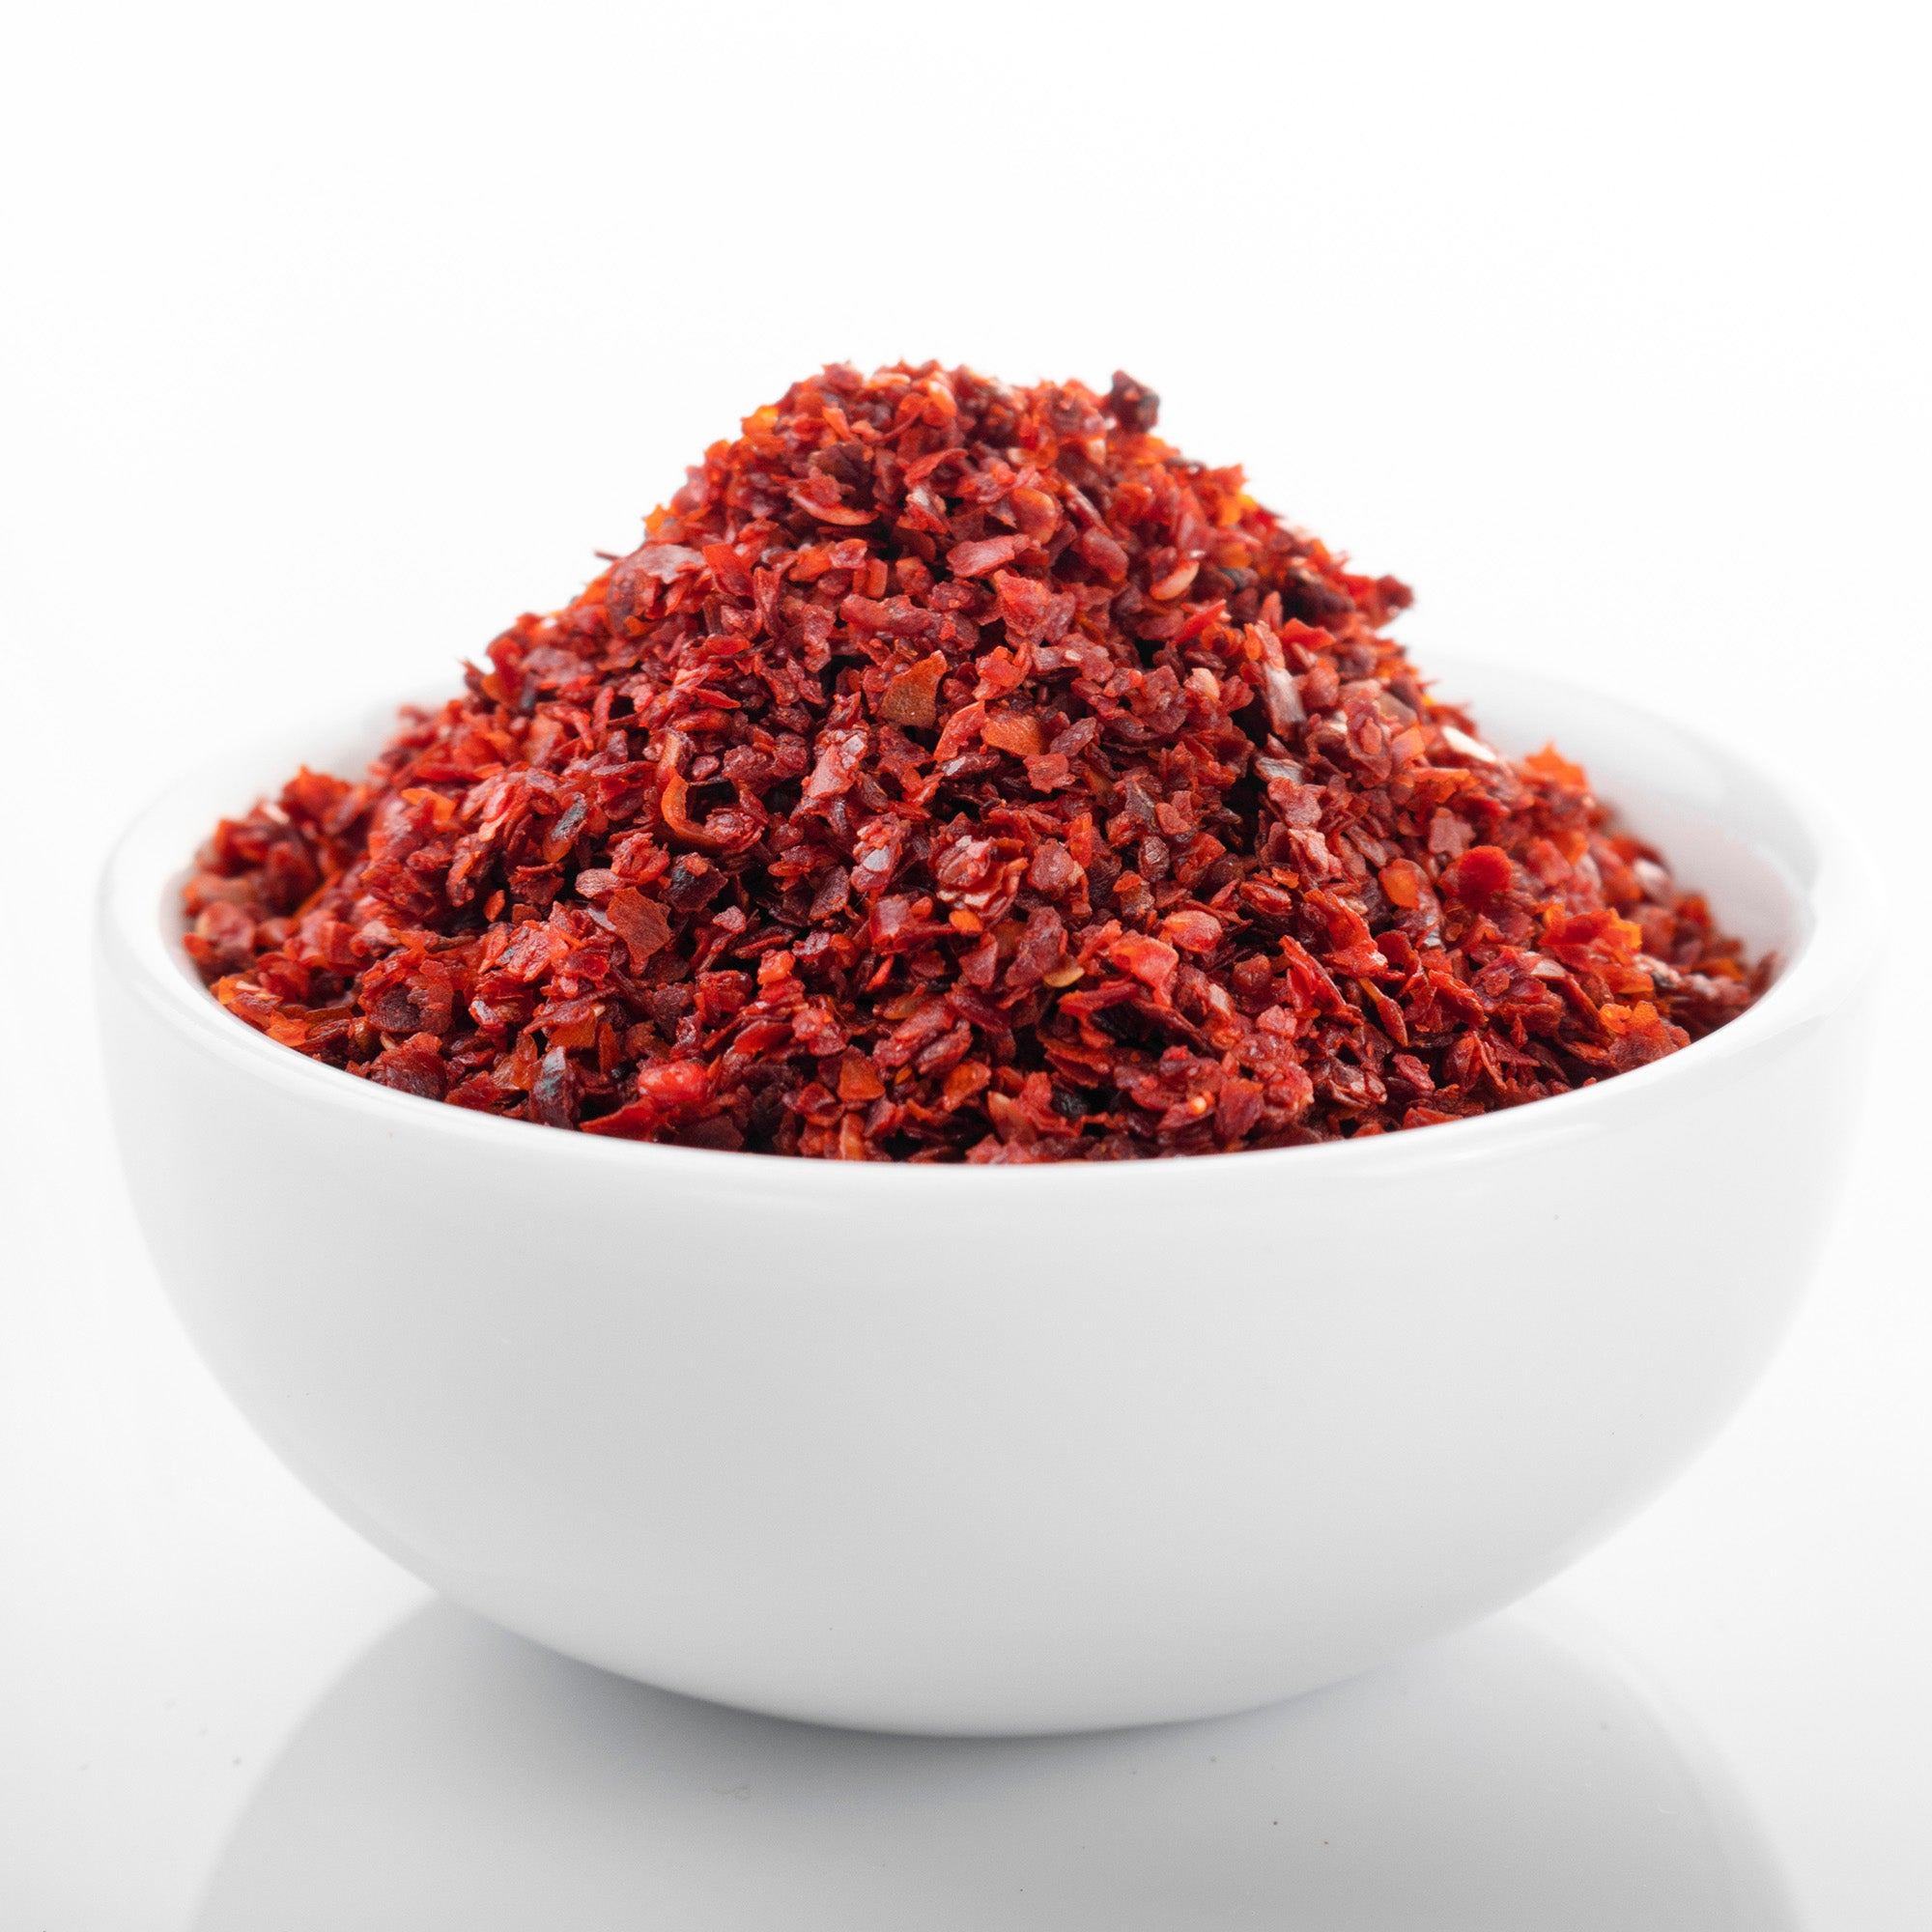 Korean Red Pepper Chili Flakes (Gochugaru)